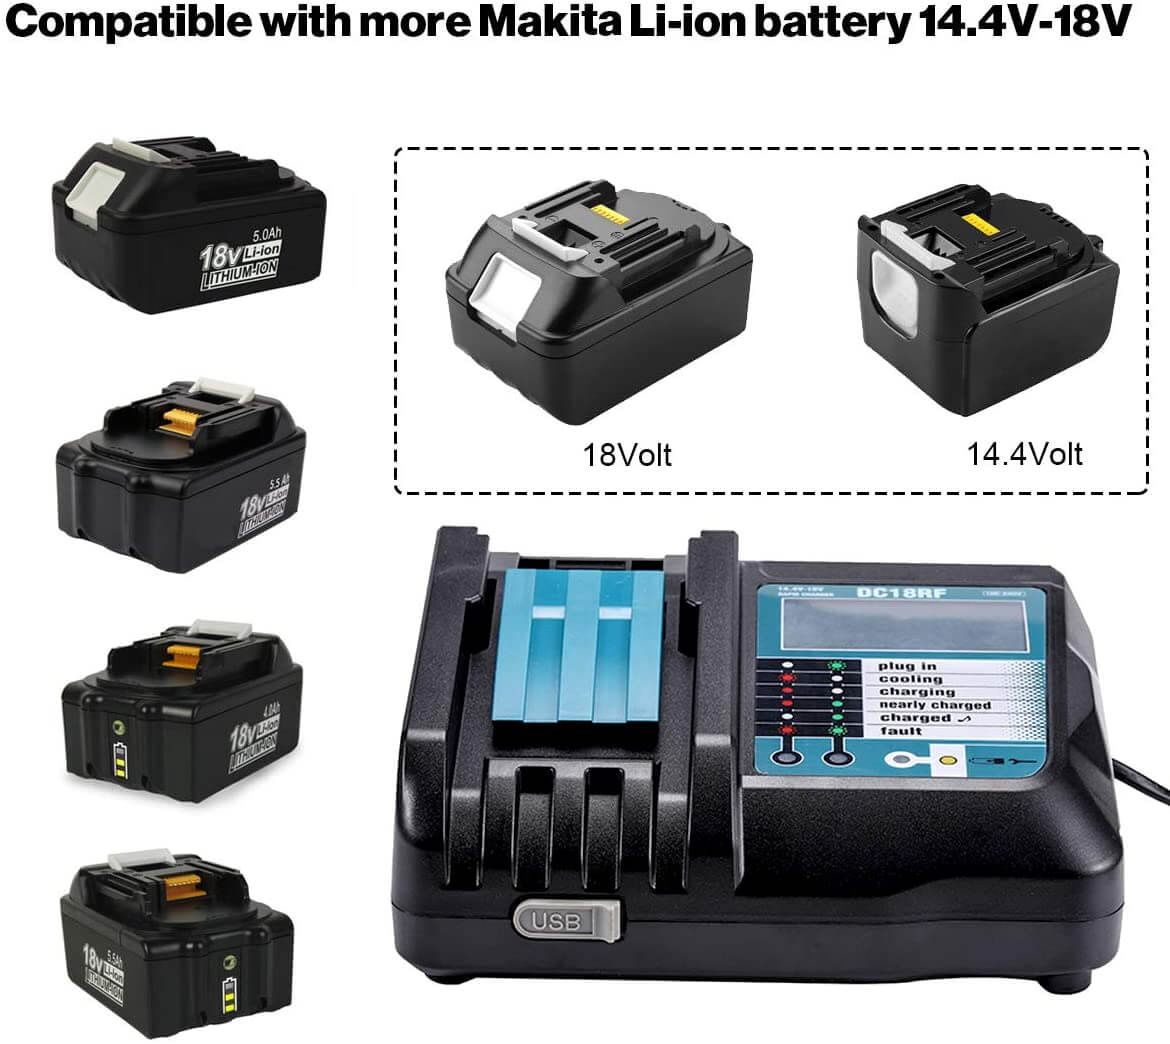 für Makita 3.5A Li-Ion Ersatz Ladegerät DC18RF DC18RA 14.4V-18V mit LCD Bildschirm - Dasbatteries